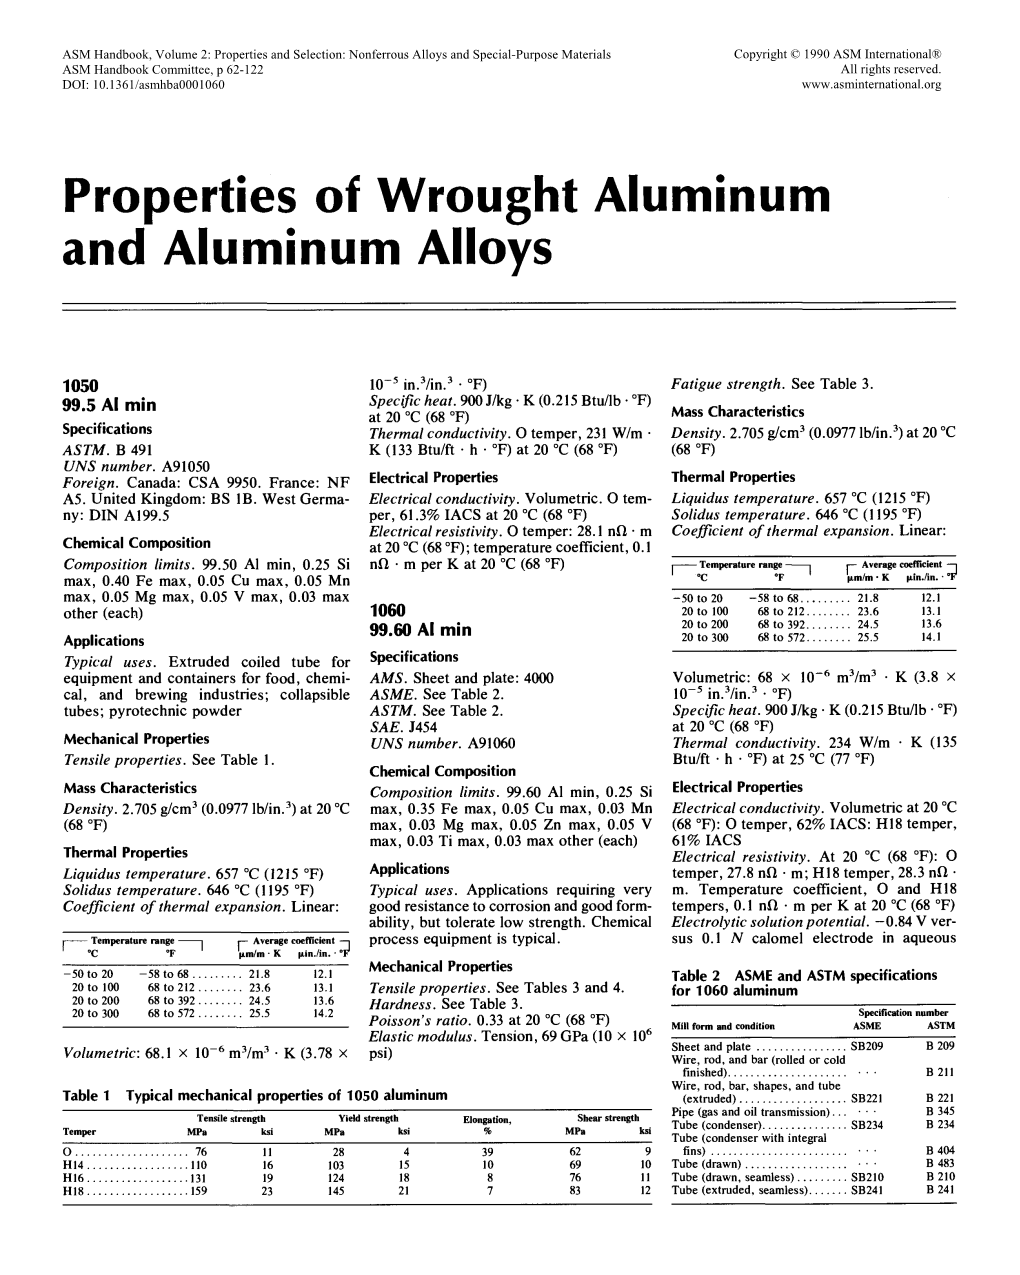 Properties of Wrought Aluminum and Aluminum Alloys